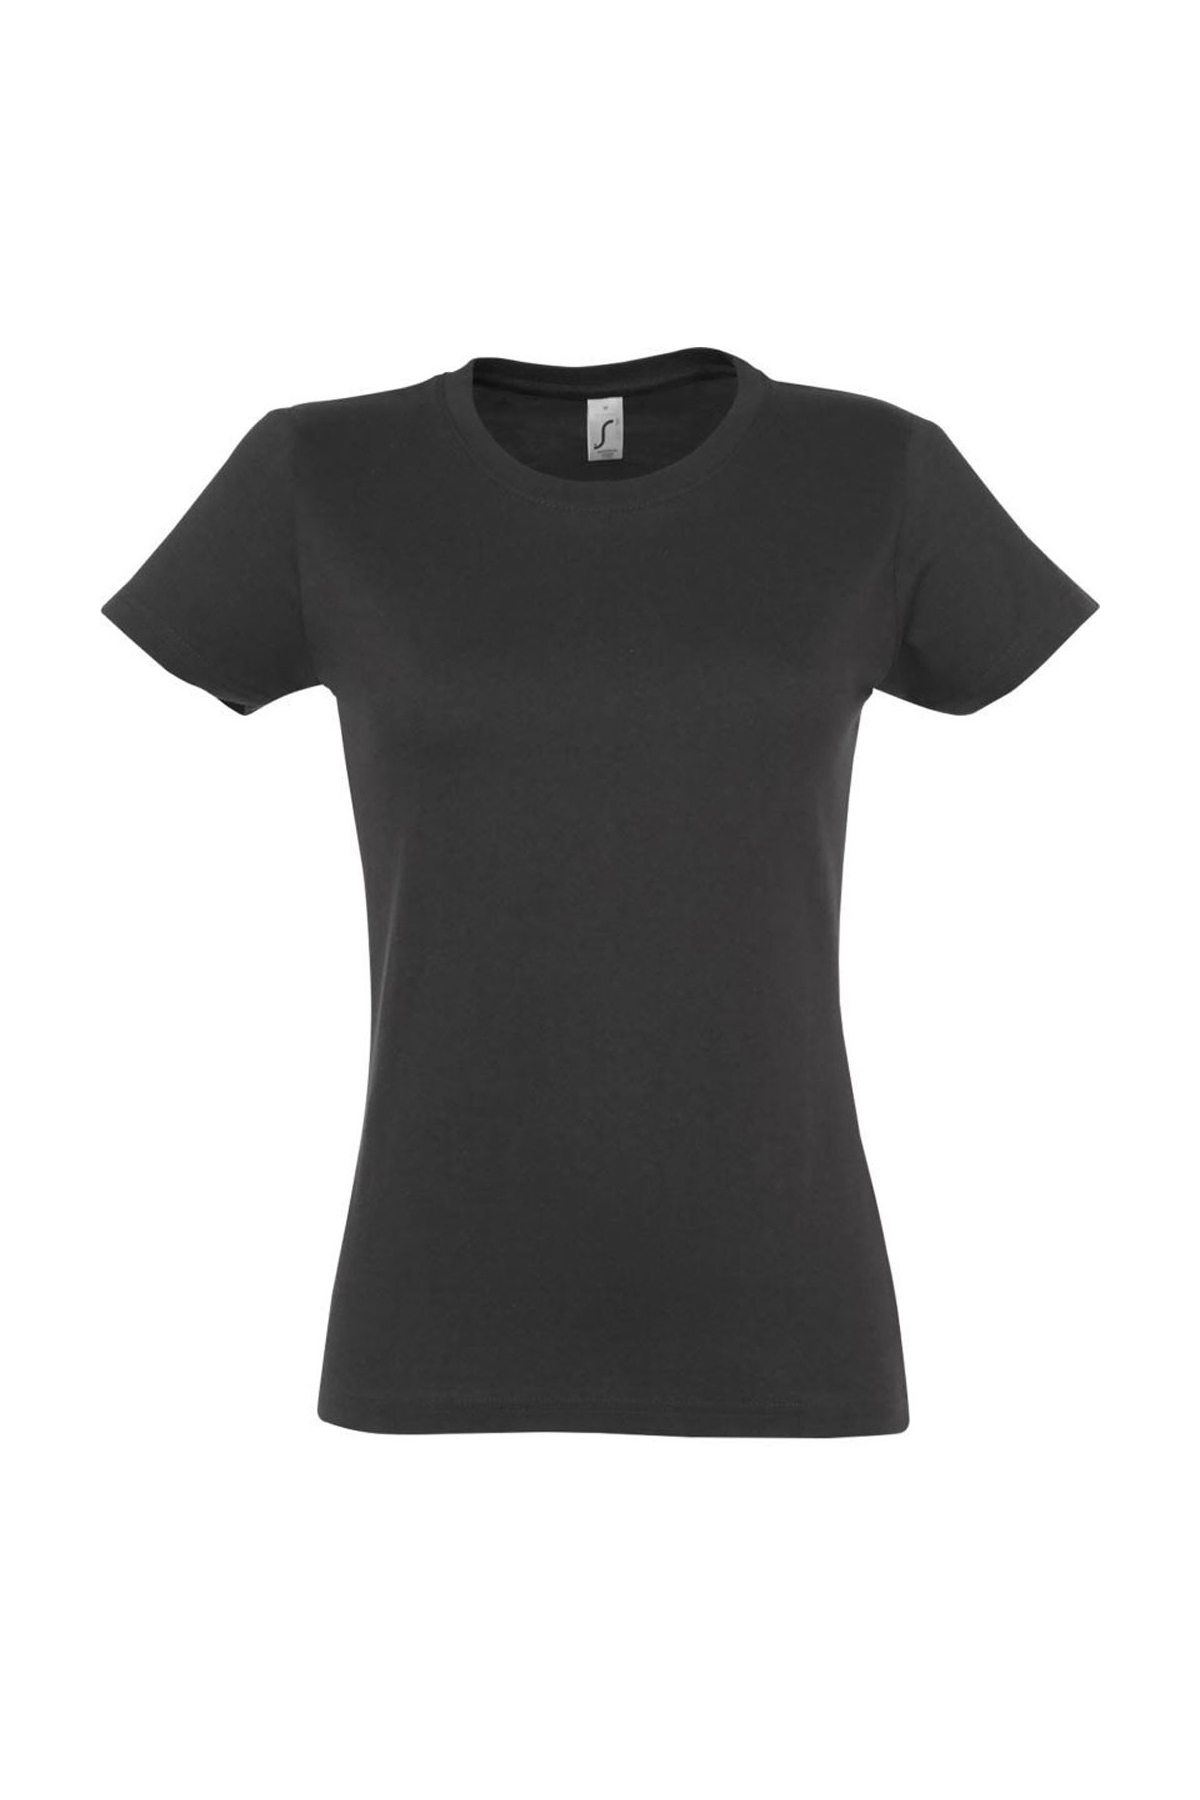 Jobe T-Shirt Woman Black Damen Shirt schwarz